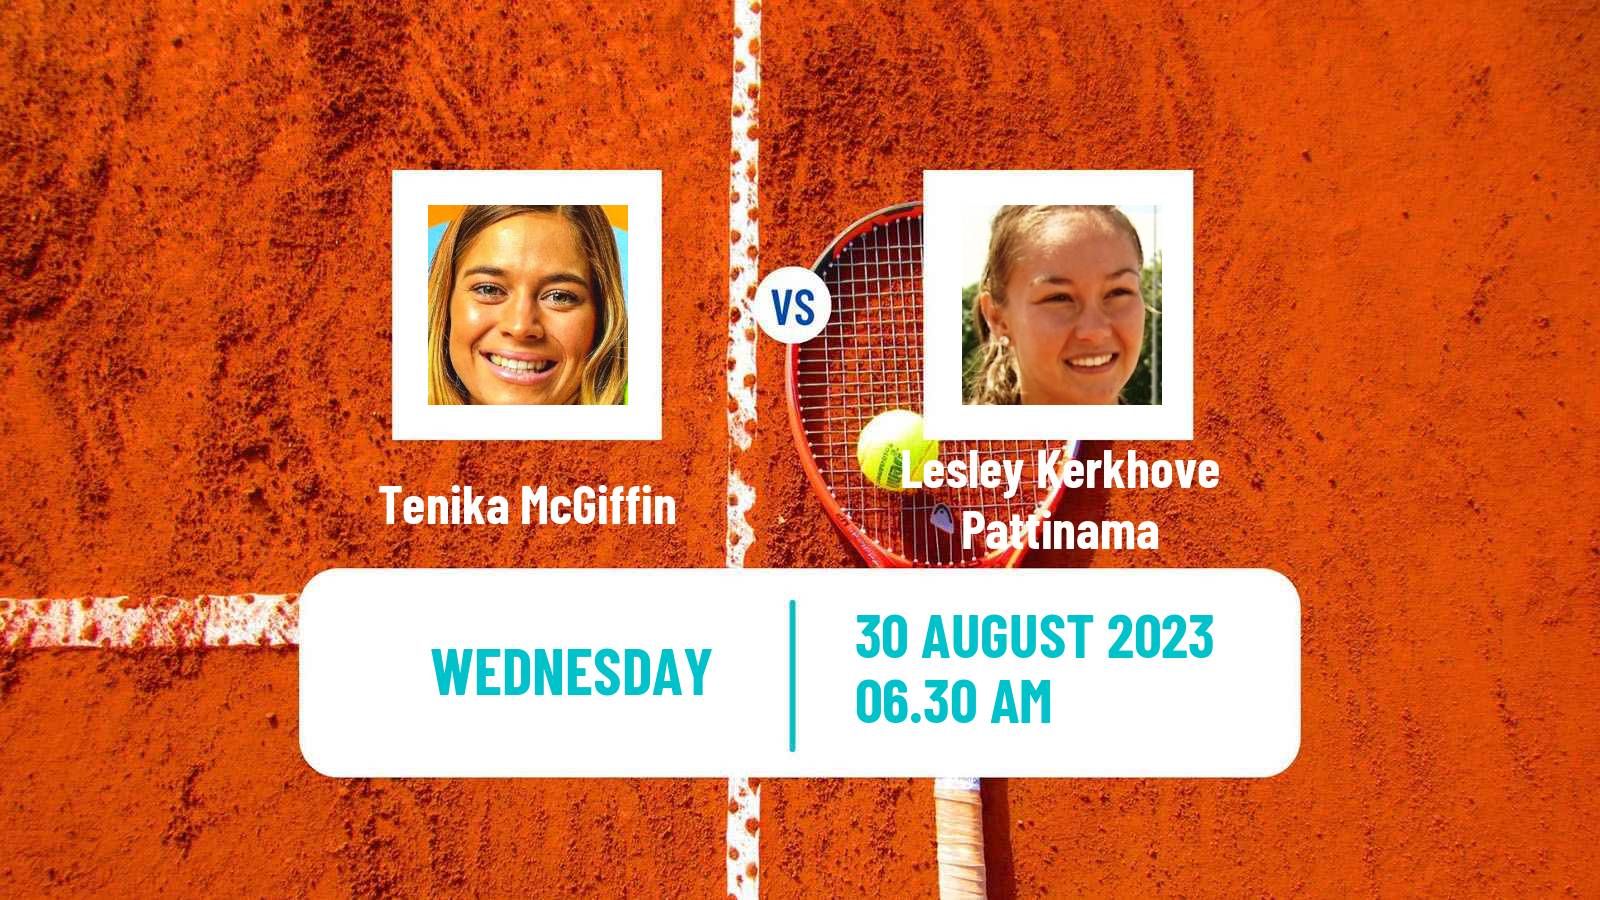 Tennis ITF W25 Valladolid Women Tenika McGiffin - Lesley Kerkhove Pattinama